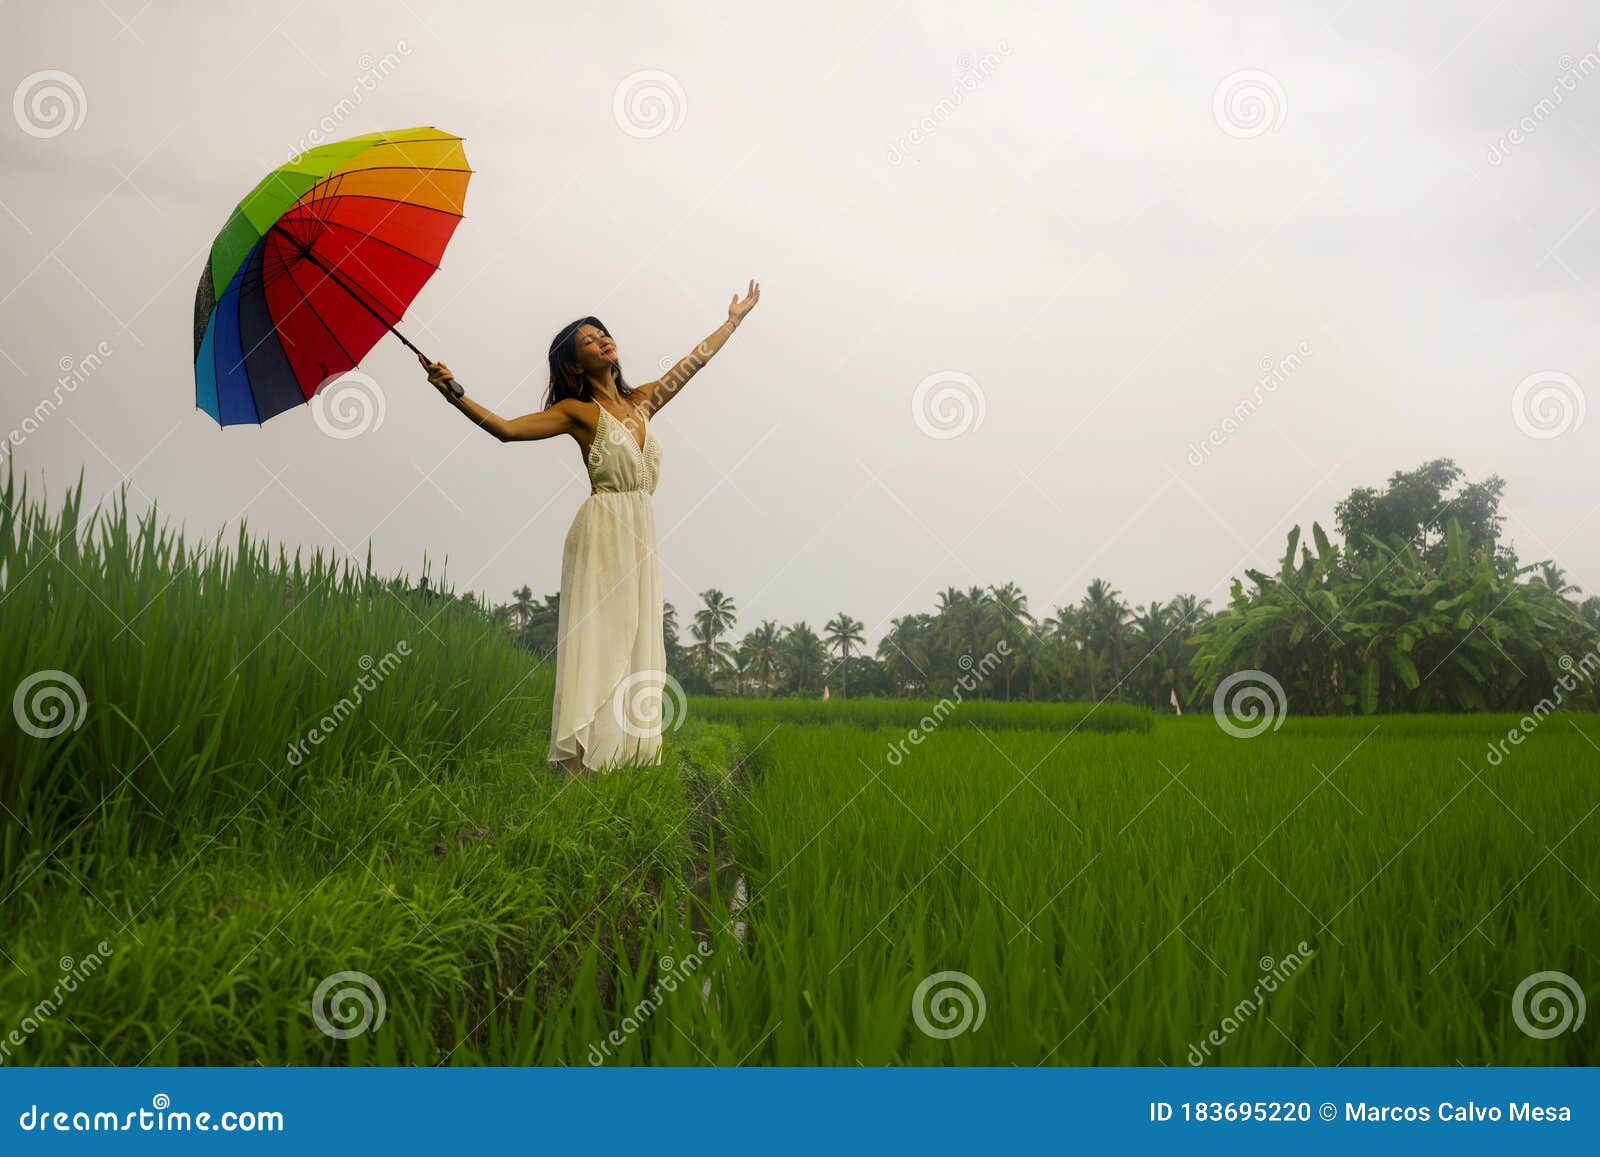 Girl holding umbrella rainbow japanese